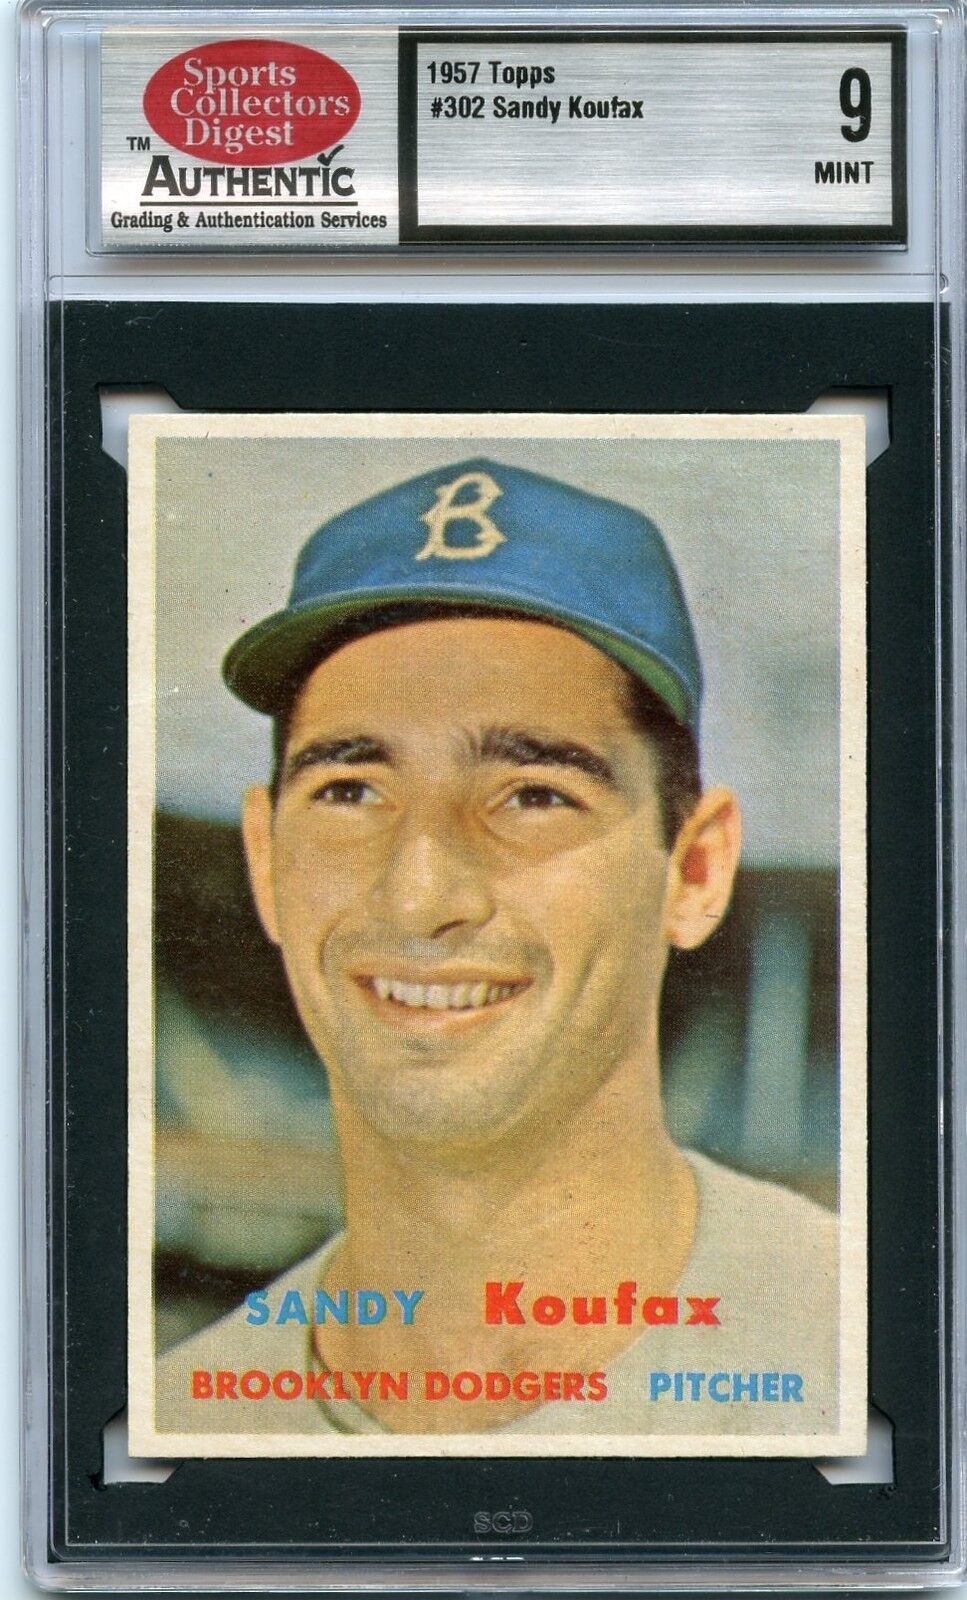 1957 Topps #302 Sandy Koufax SCD 9 Mint cross PSA 9 sold $44k &$78k Dodgers